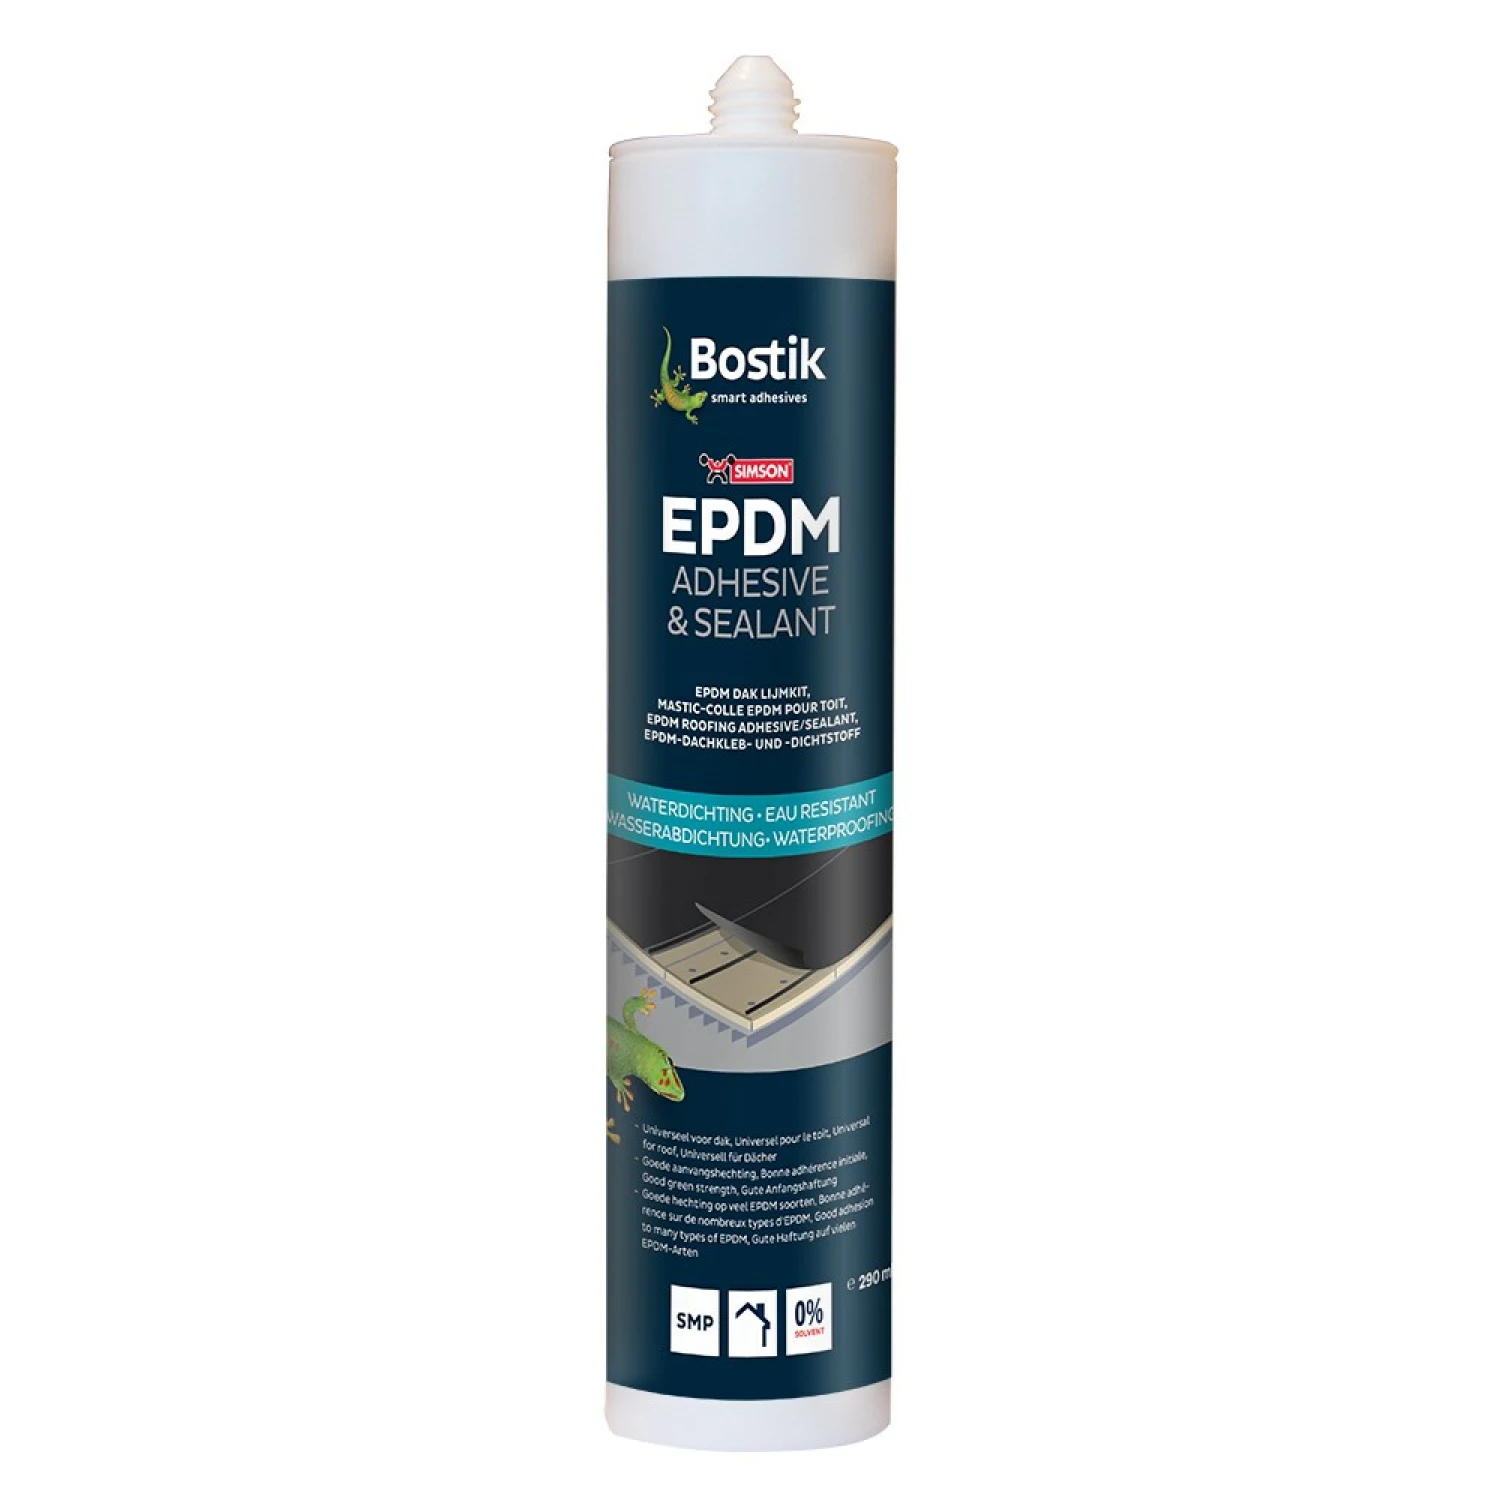 Bostik 30608958 EPDM Adhesive & Sealant - EPDM kit - 290 ml